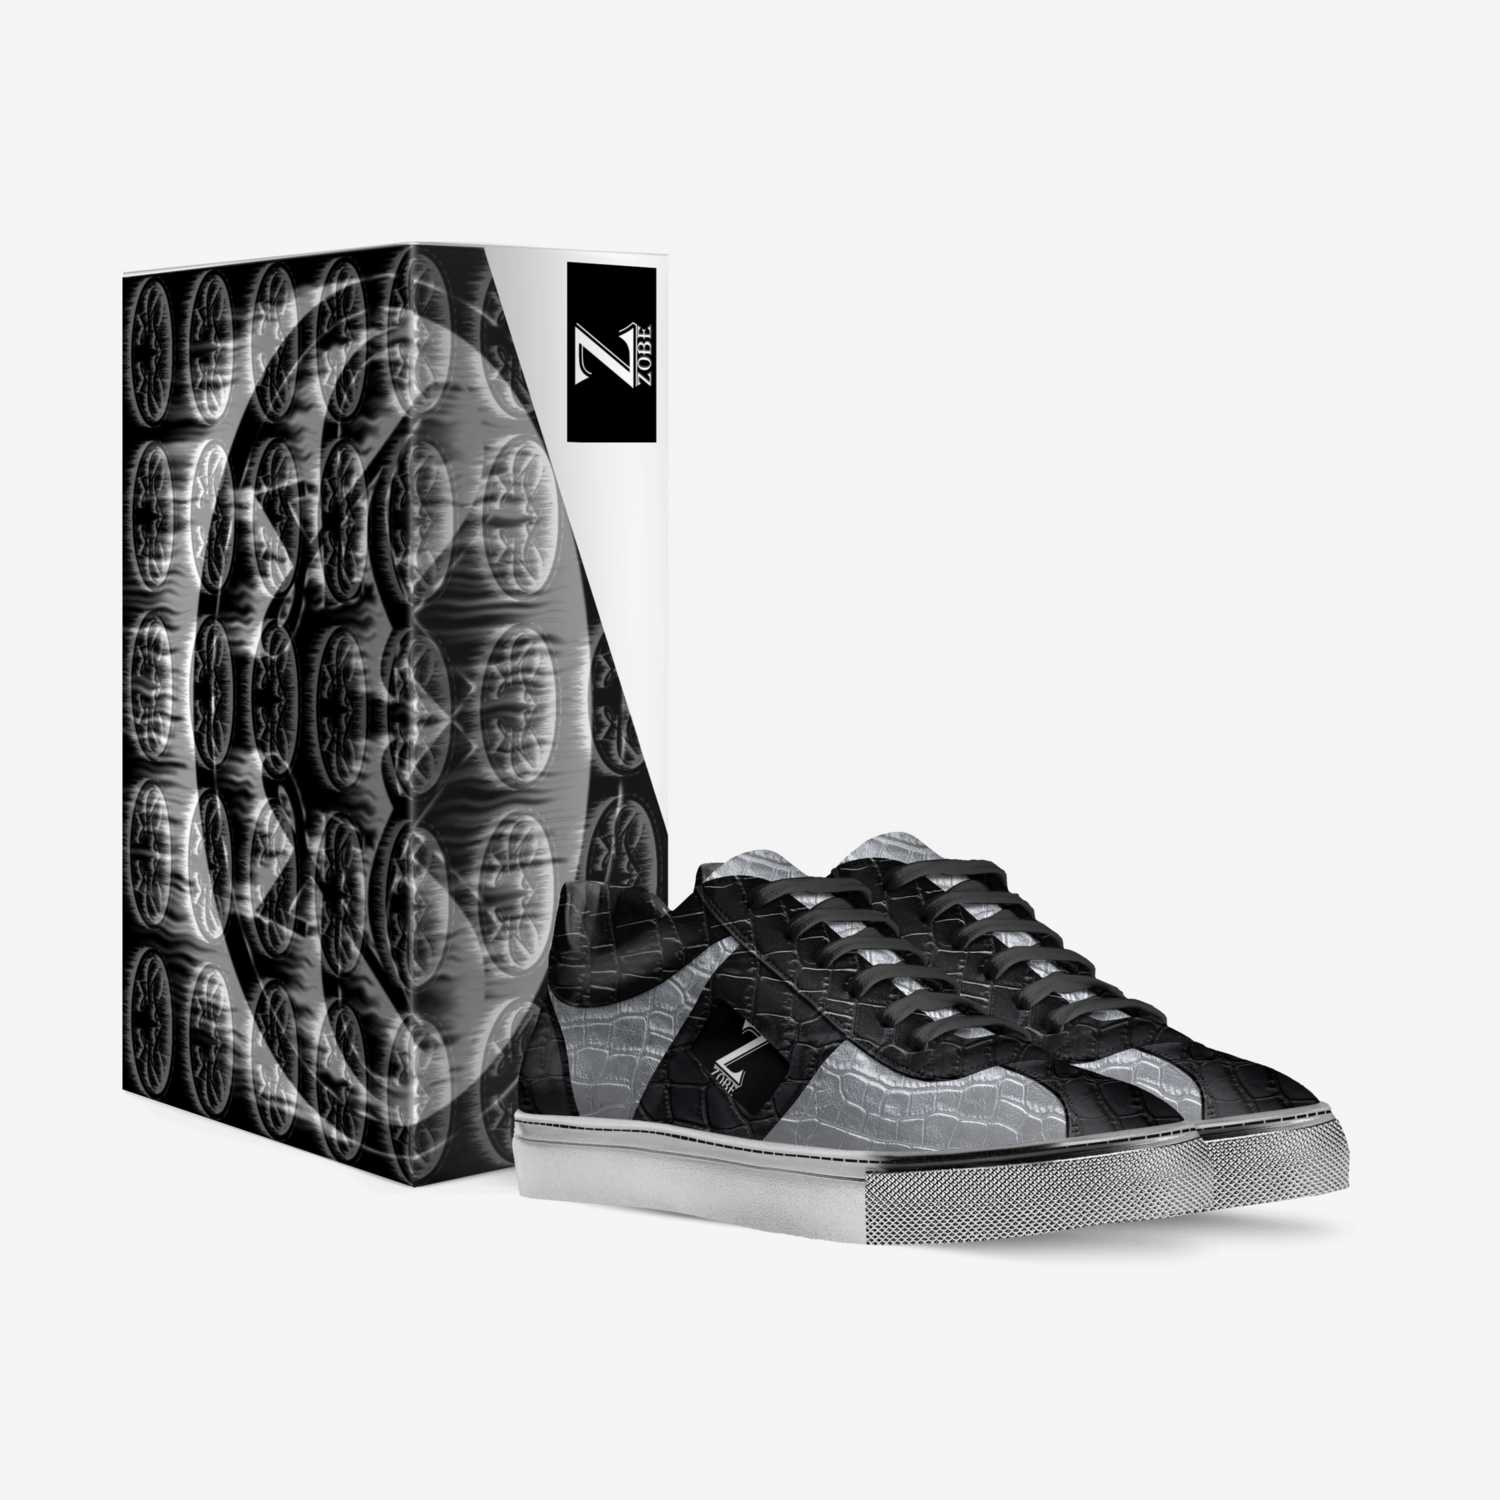 Zobe Kicks 2.0 custom made in Italy shoes by Alonzo Black | Box view